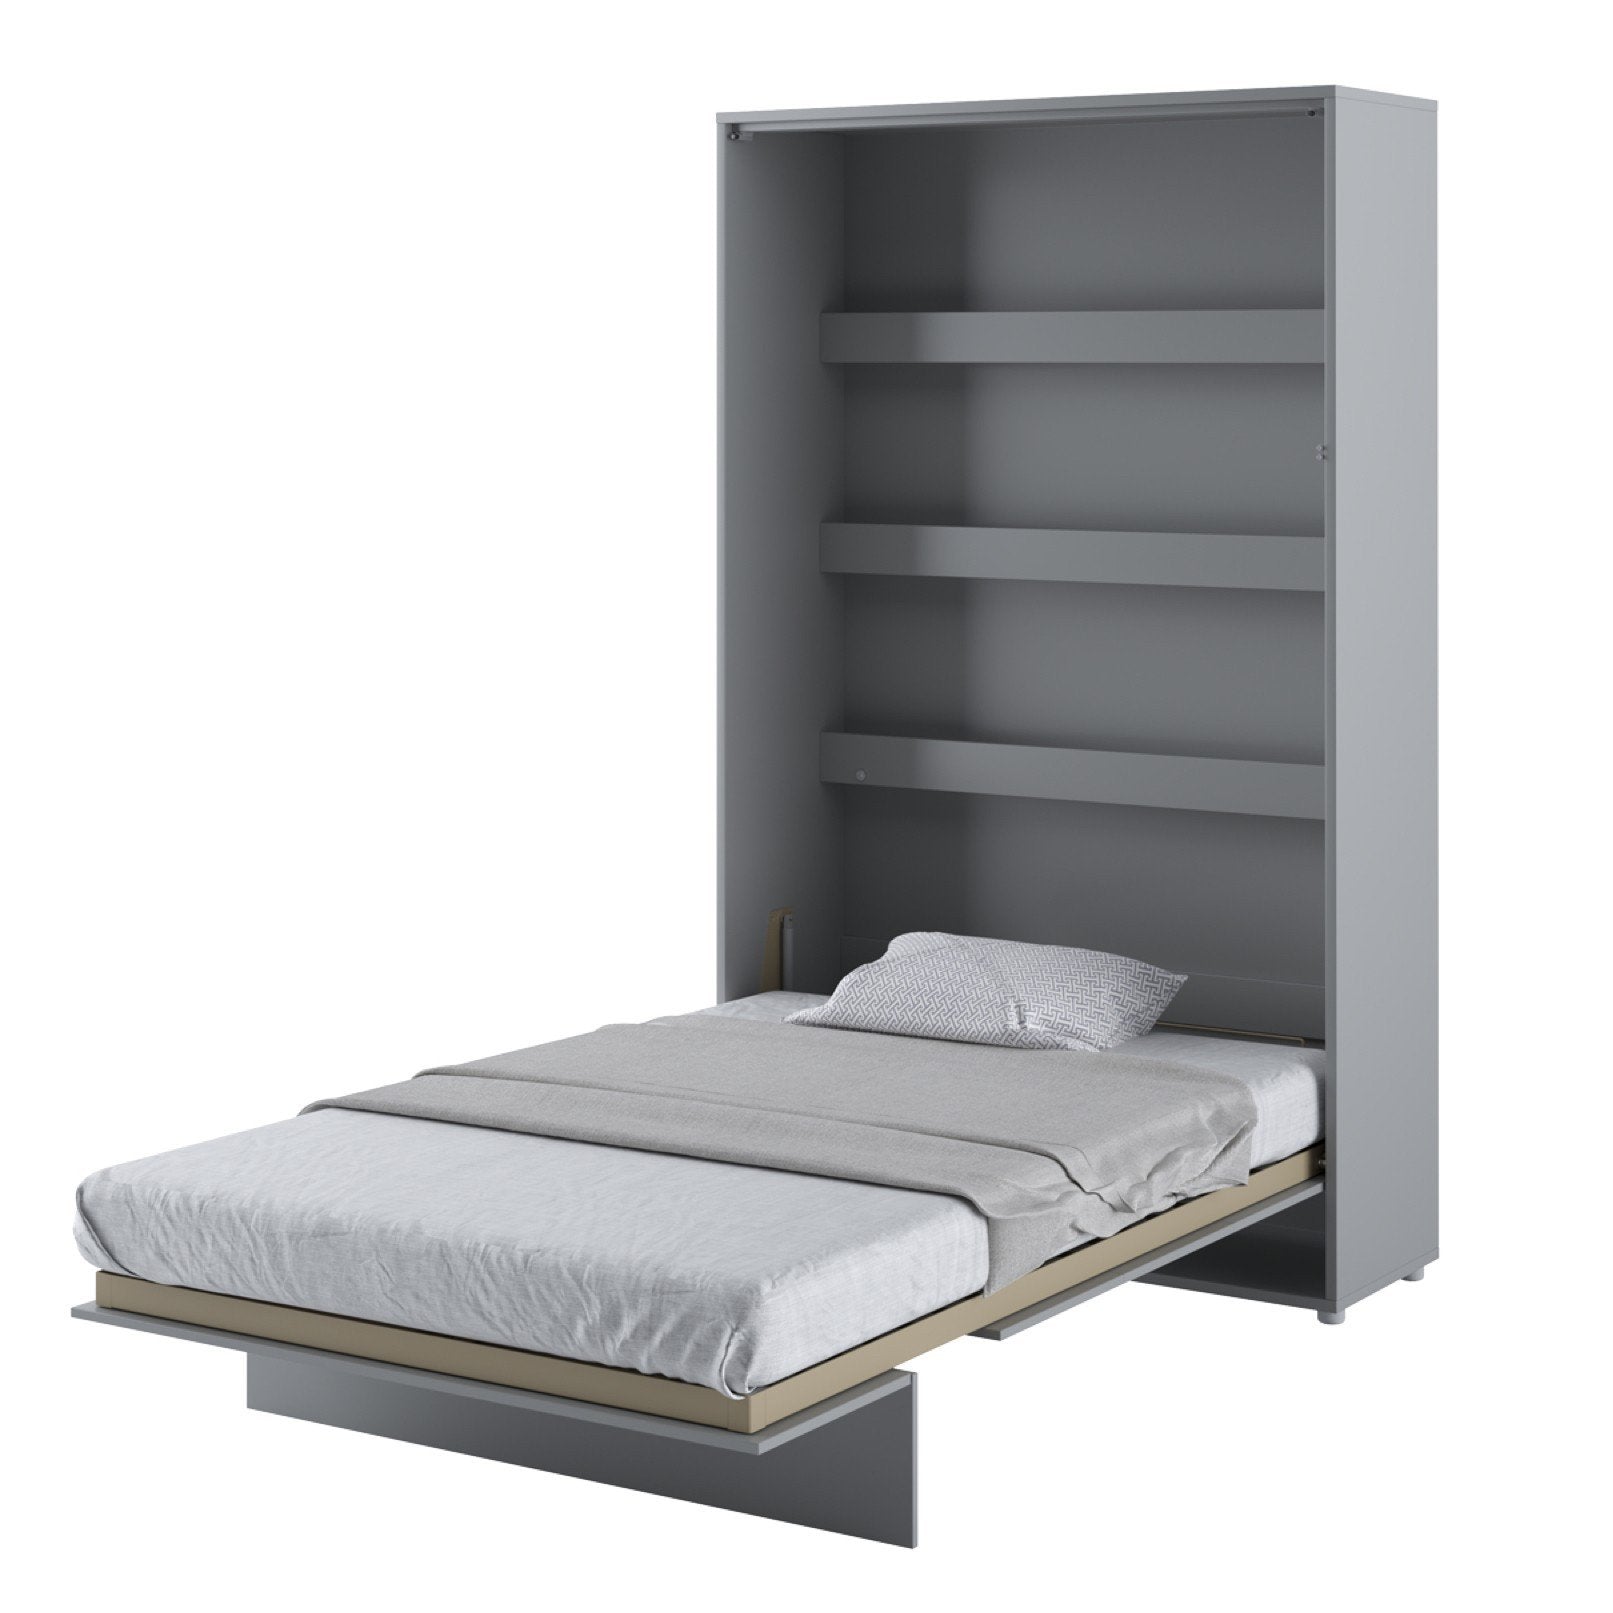 View BC02 Vertical Wall Bed Concept 120cm Murphy Bed Grey Matt 120 x 200cm information